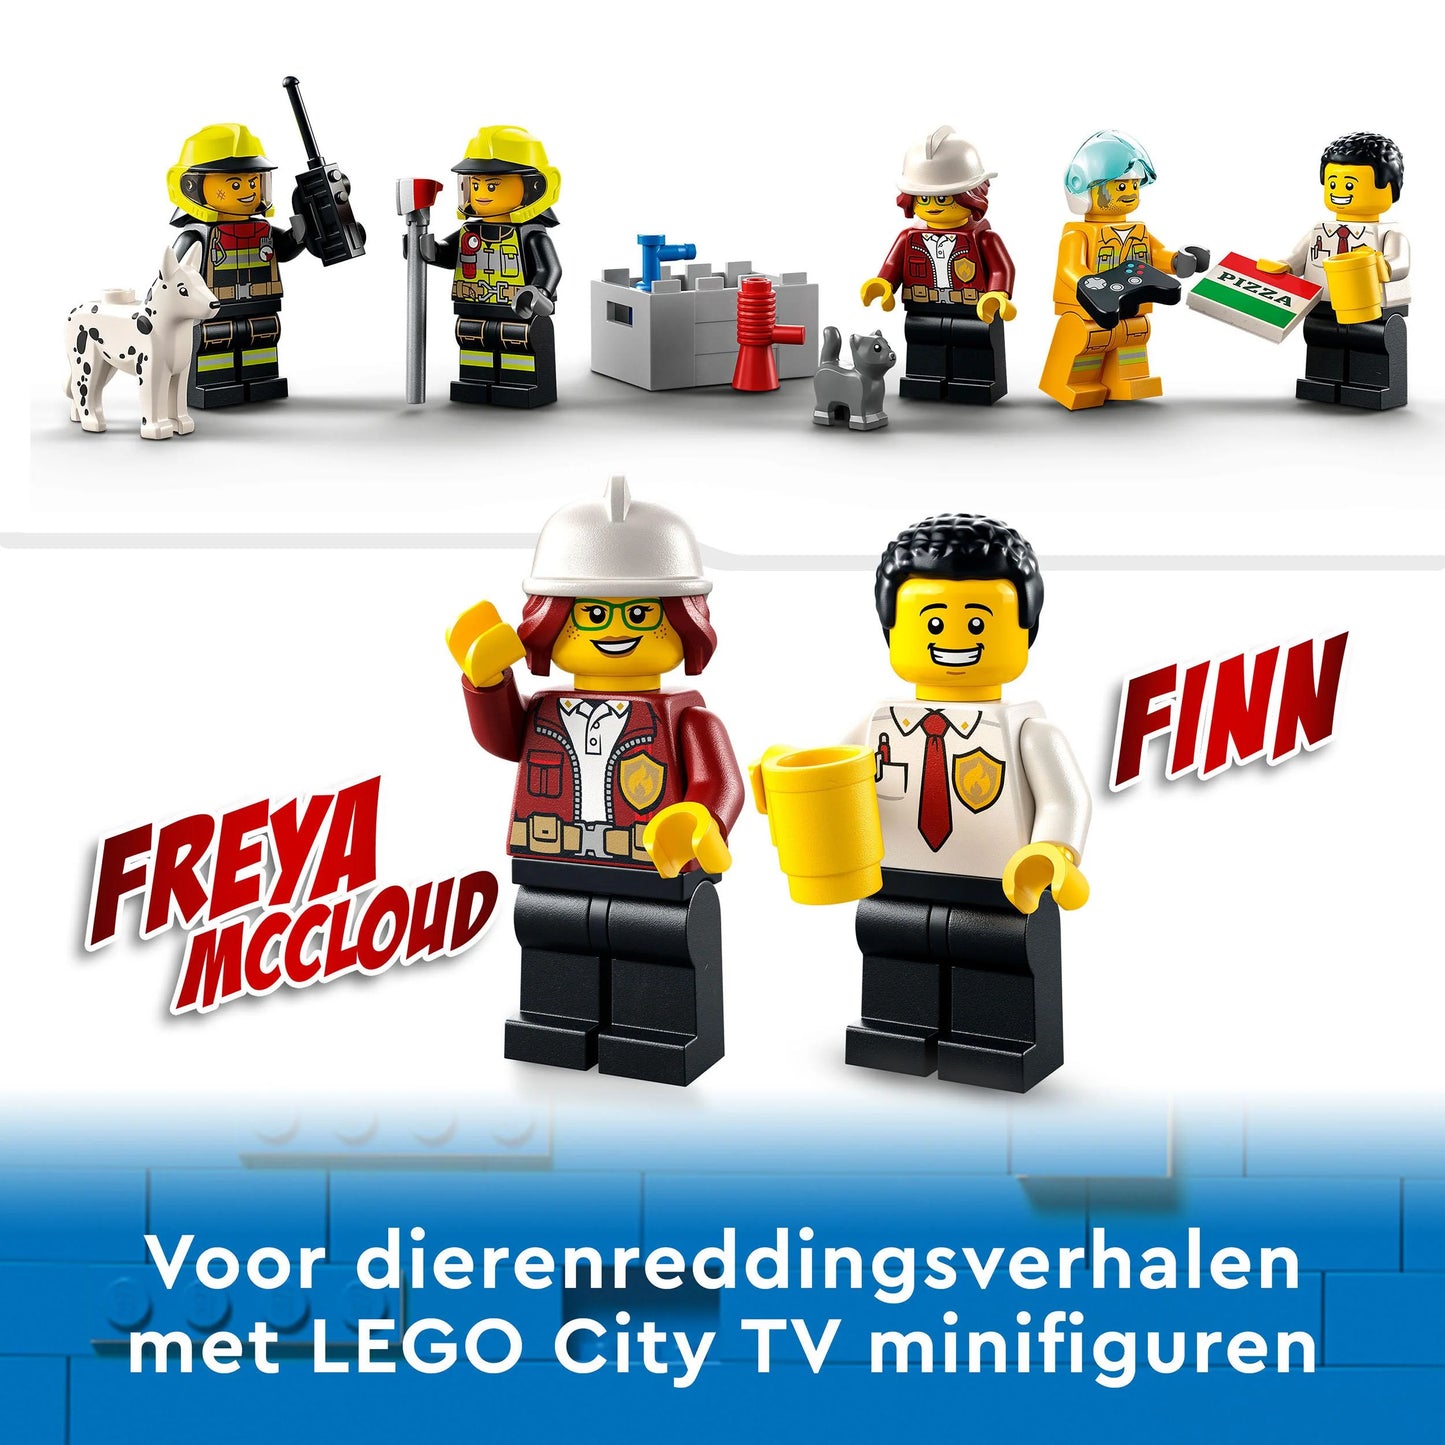 Fire Station-LEGO City